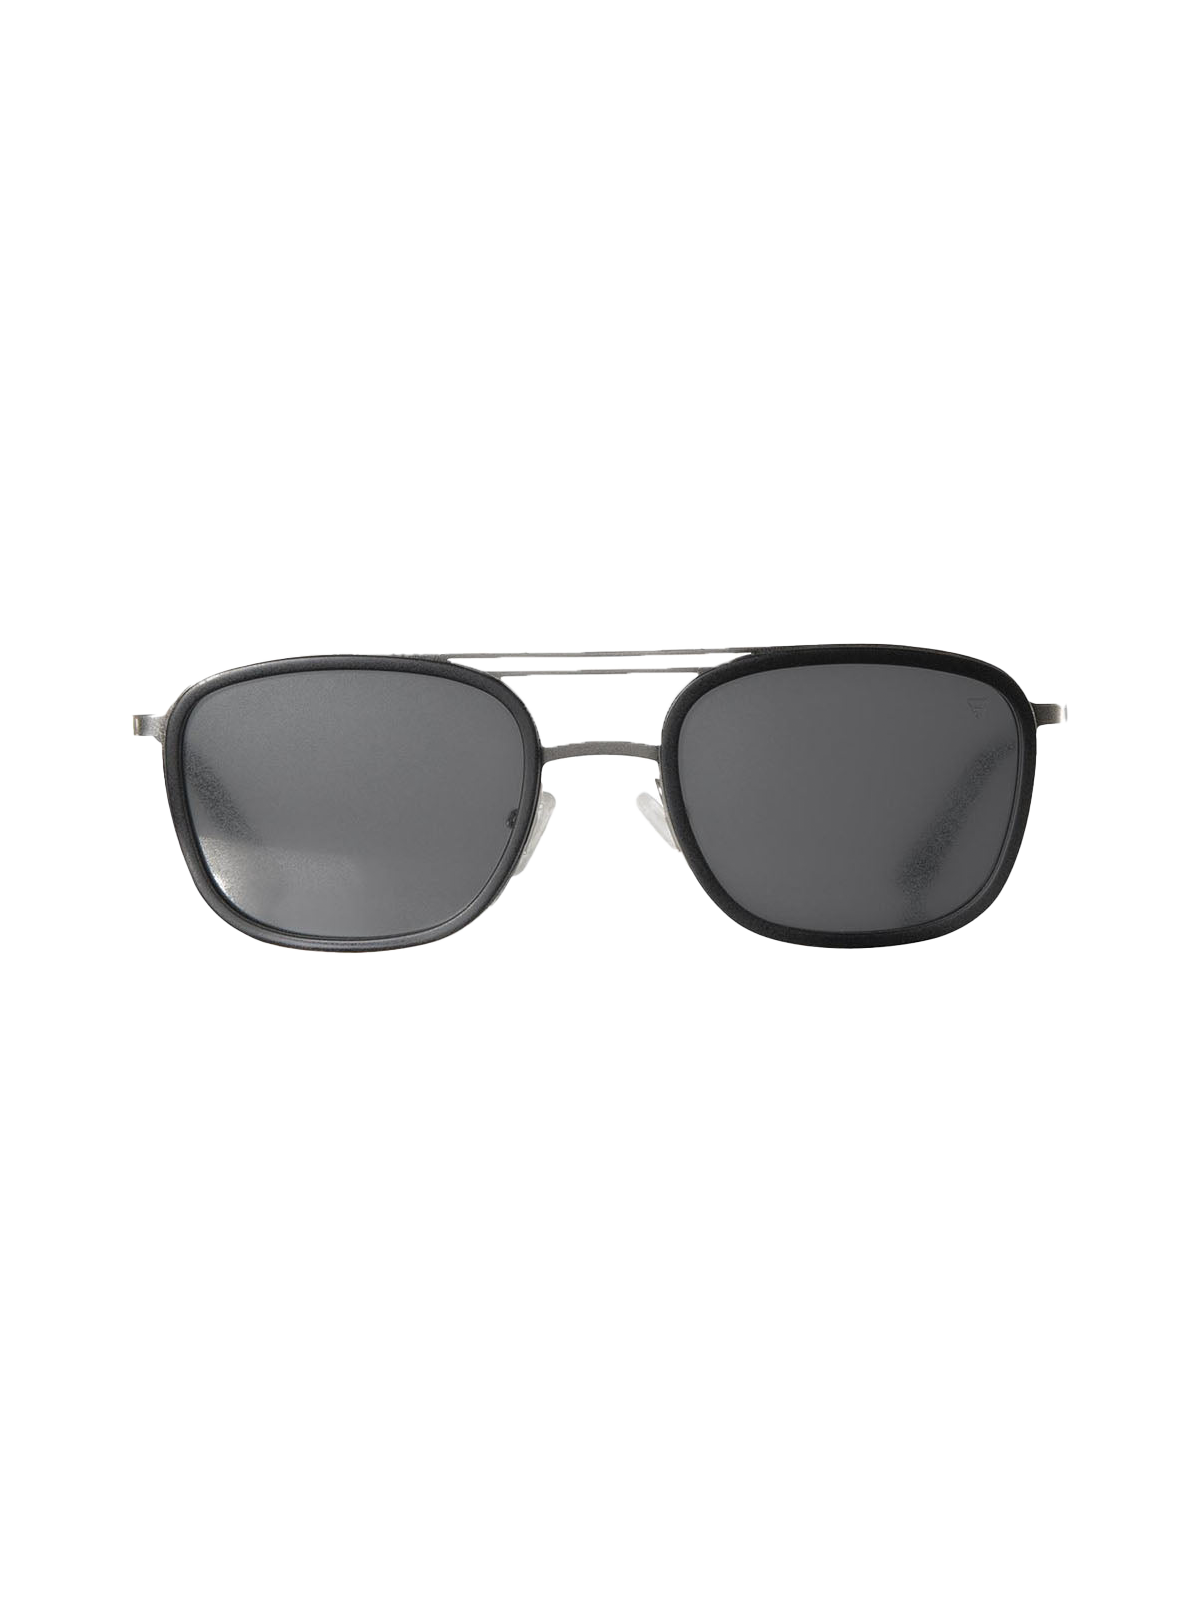 Ladoga 2 Men Sunglasses | Black